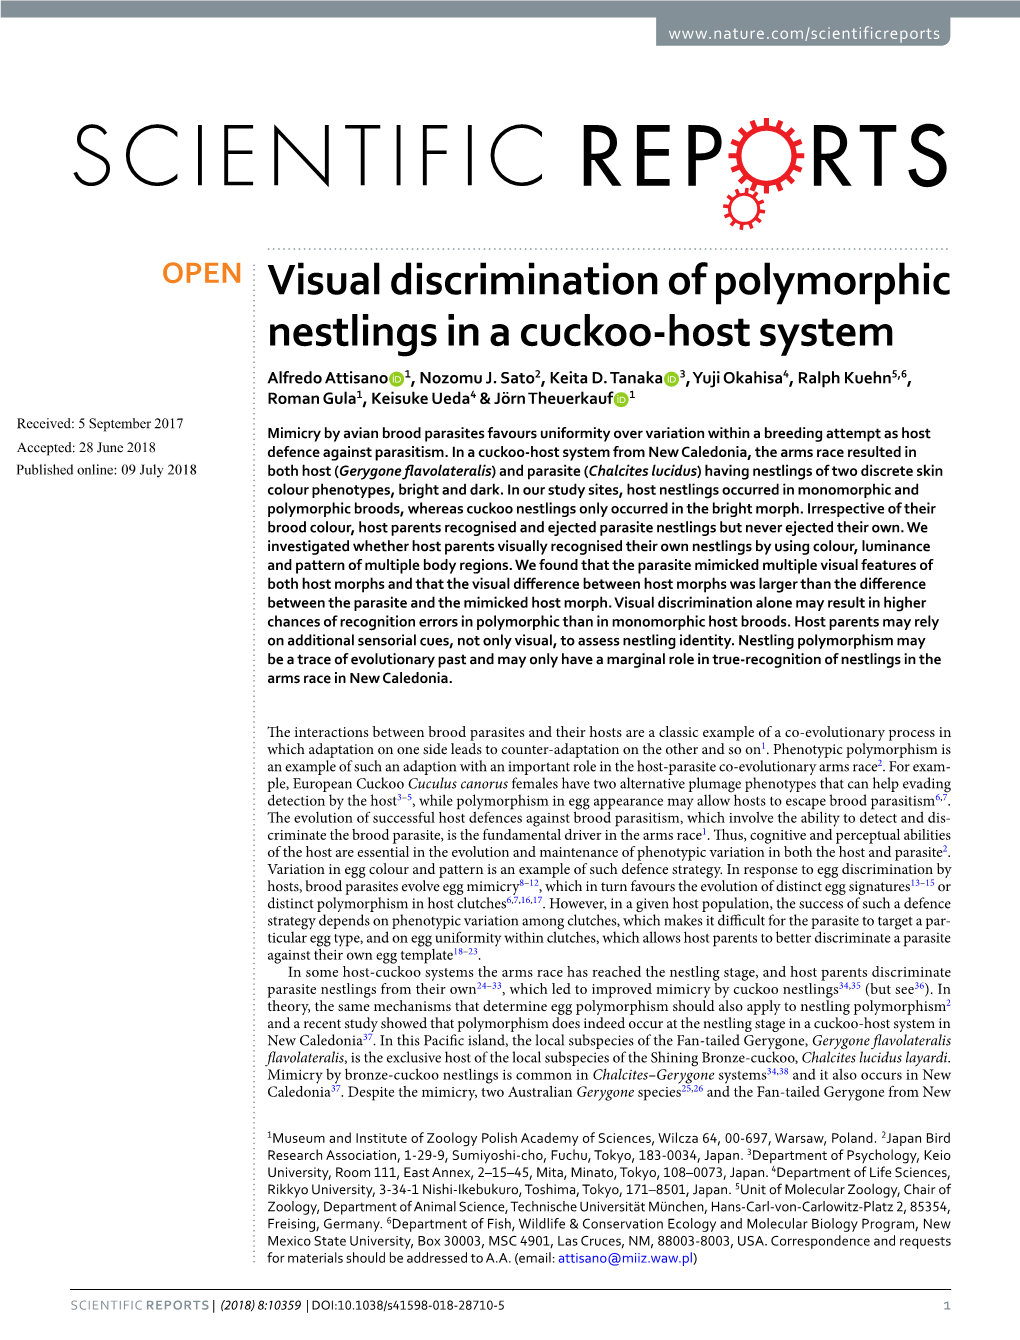 Visual Discrimination of Polymorphic Nestlings in a Cuckoo-Host System Alfredo Attisano 1, Nozomu J